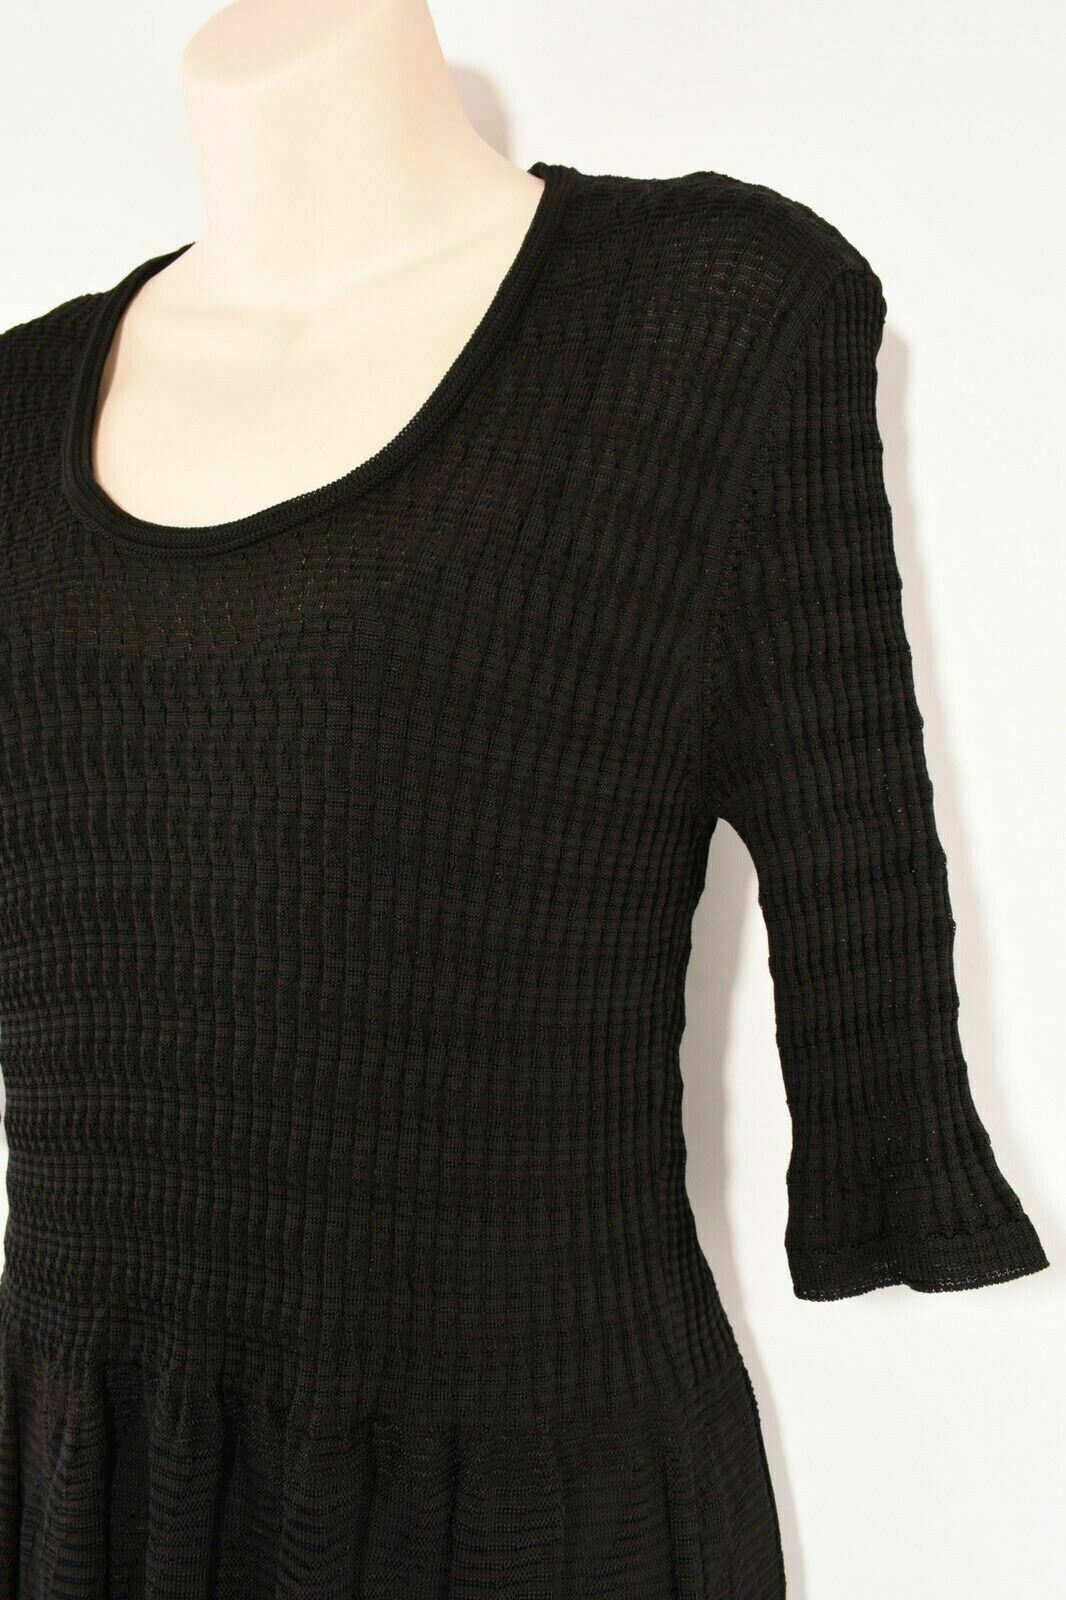 MISSONI  Women's Black Knit Skater Dress, size UK 12 / IT 44